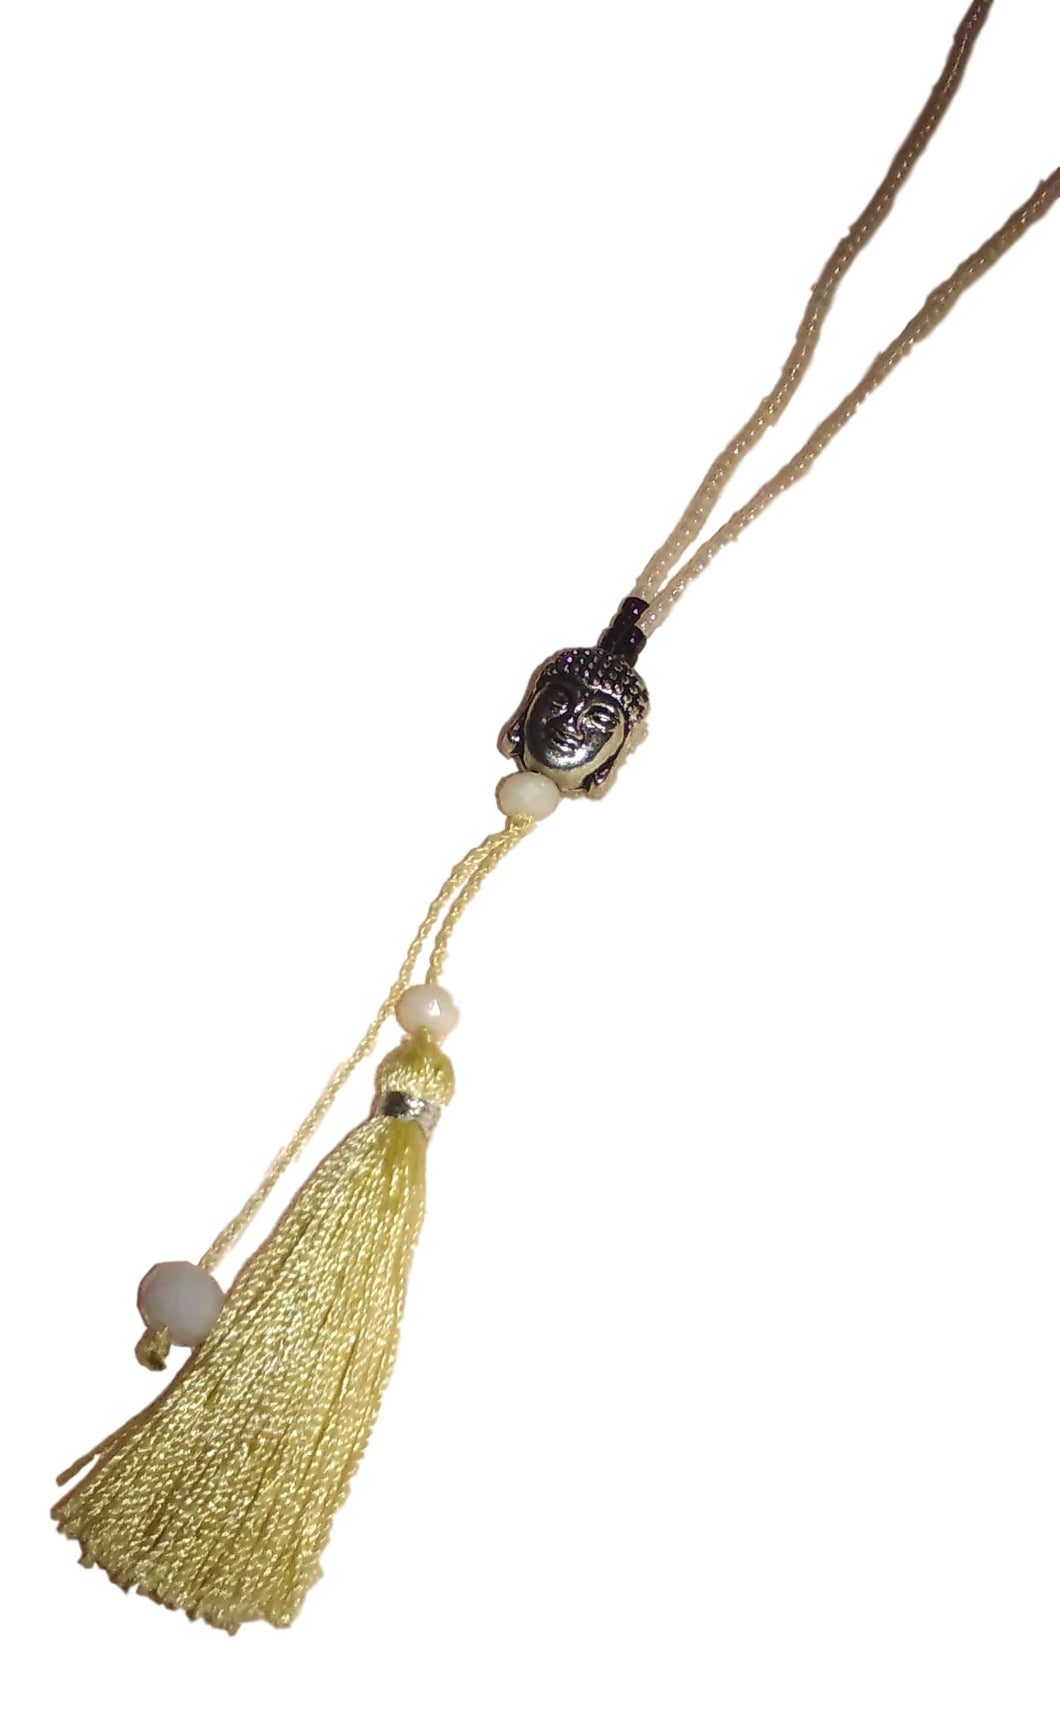 Jewelry - Mala Necklace with Buddha and small beads - Ivory